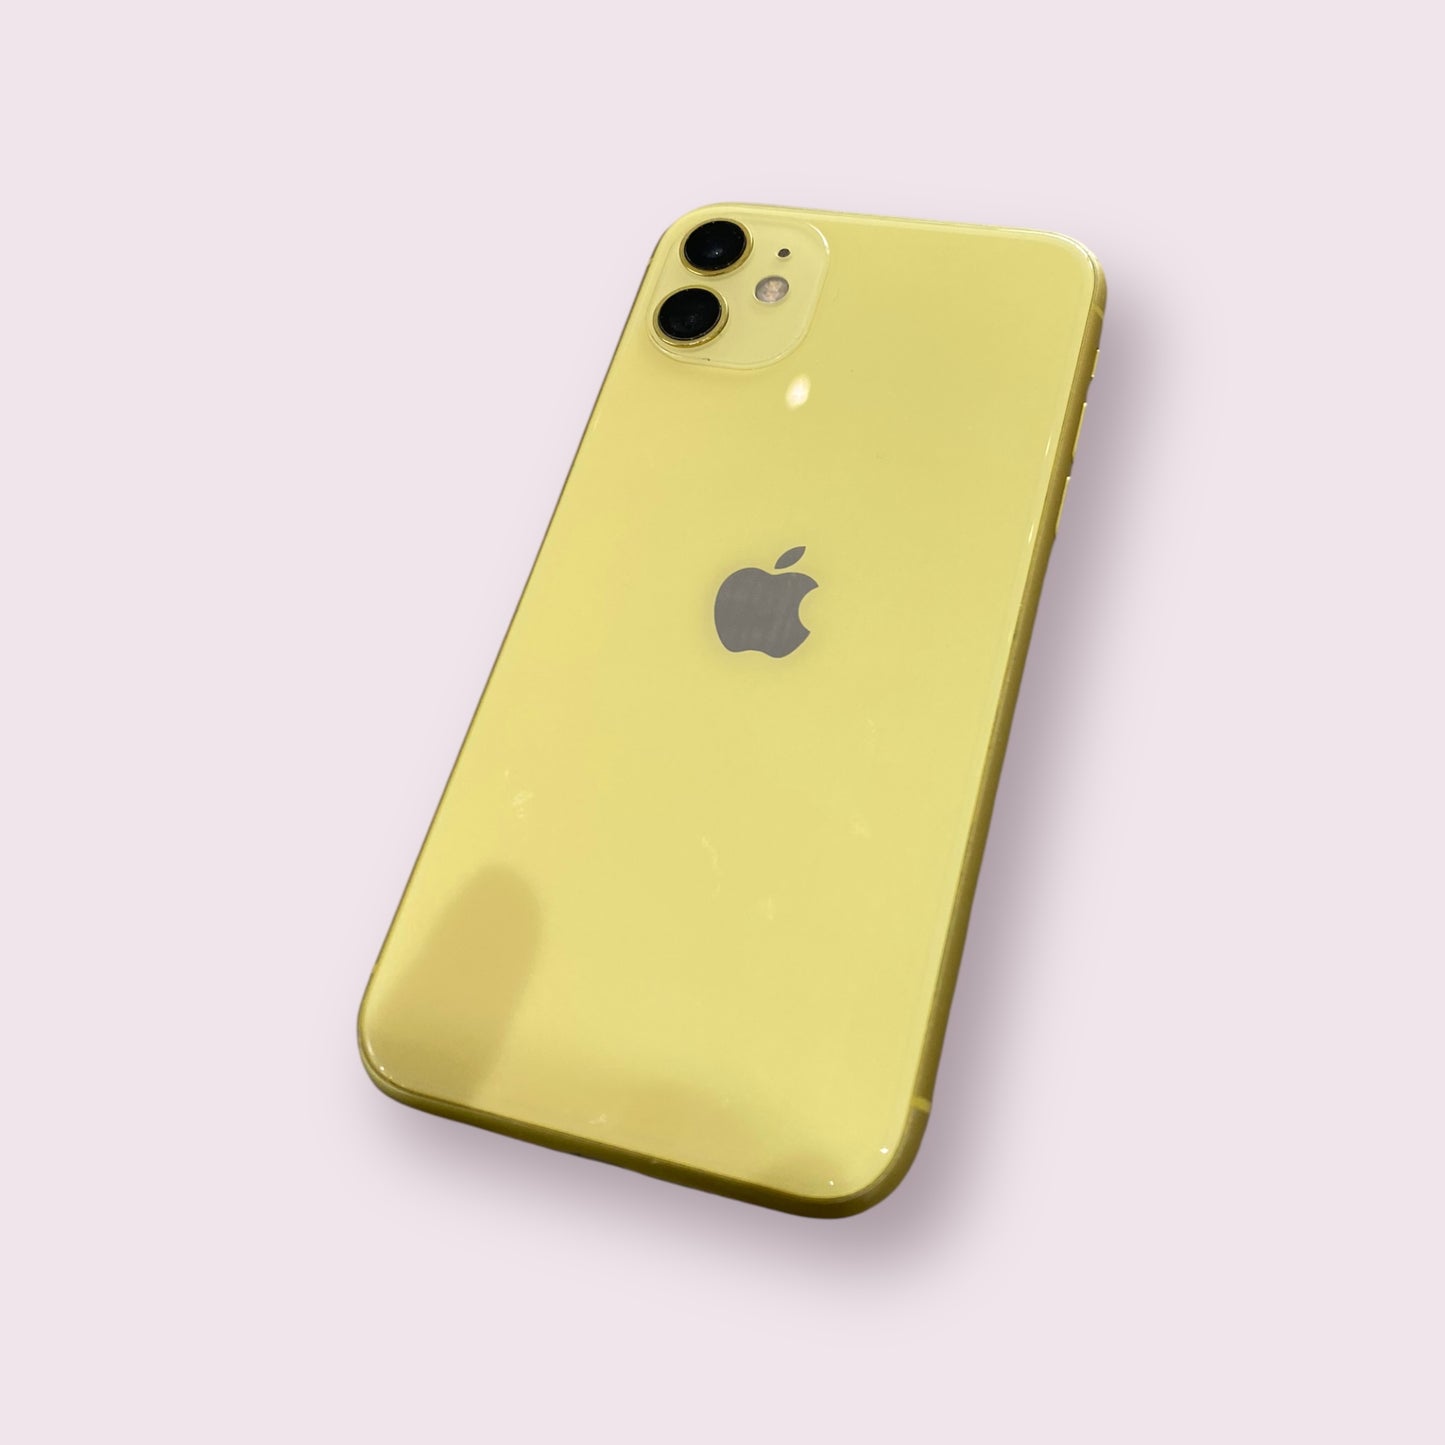 Apple iPhone 11 64GB Yellow - Unlocked - Grade B - BH100% - AM LCD